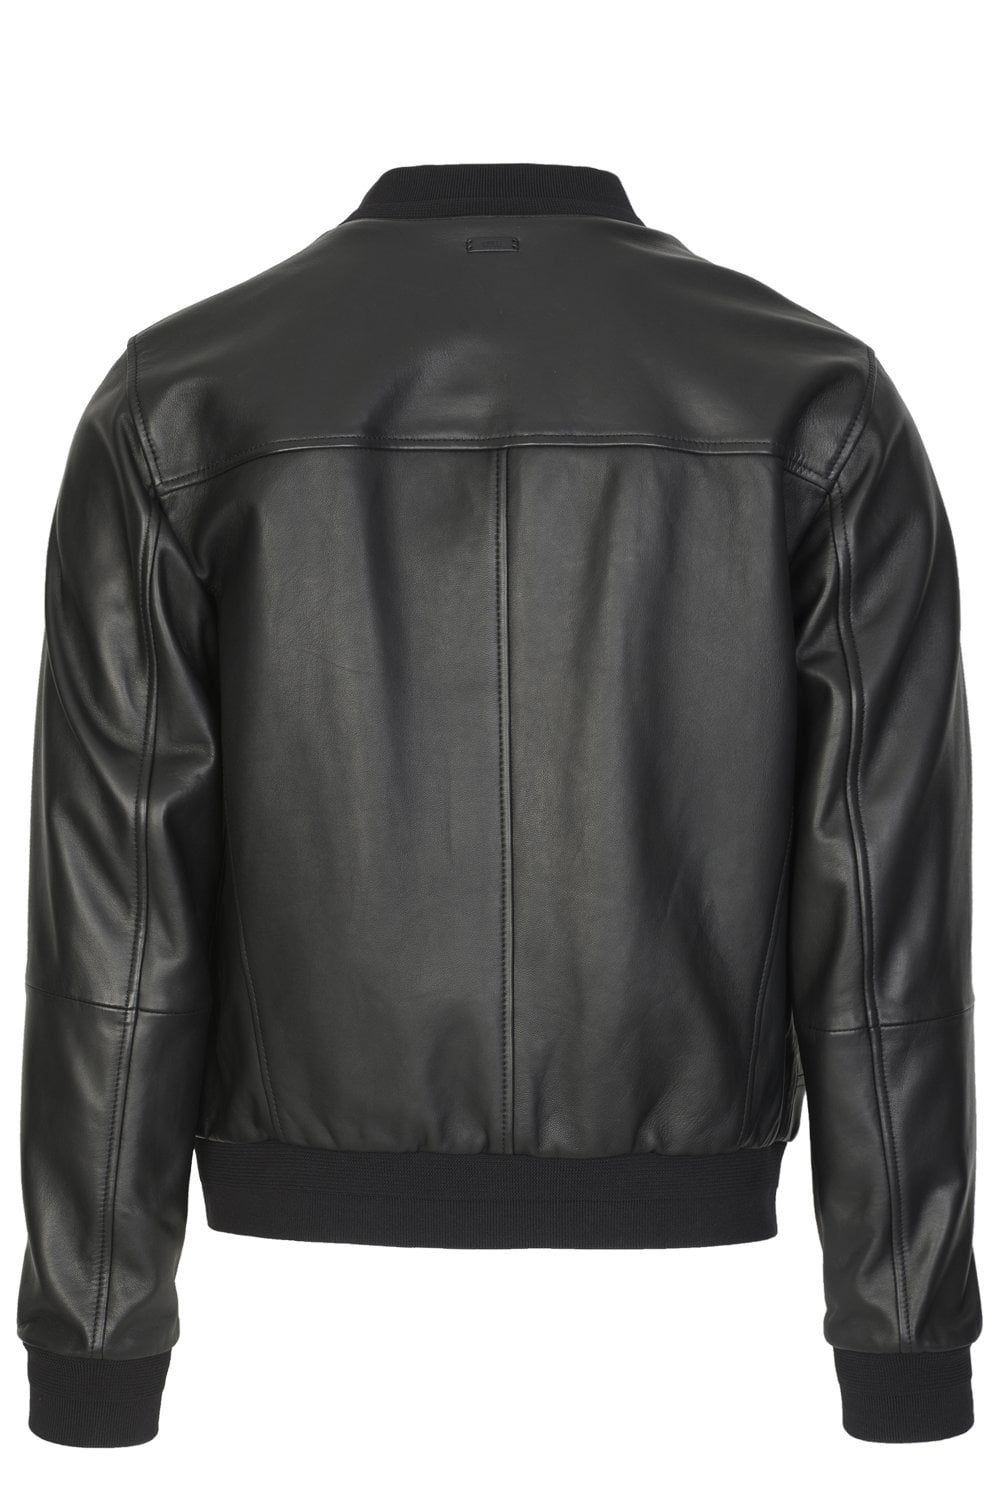 Boss Hugo Mens Black Leather Jacket - A2 Jackets